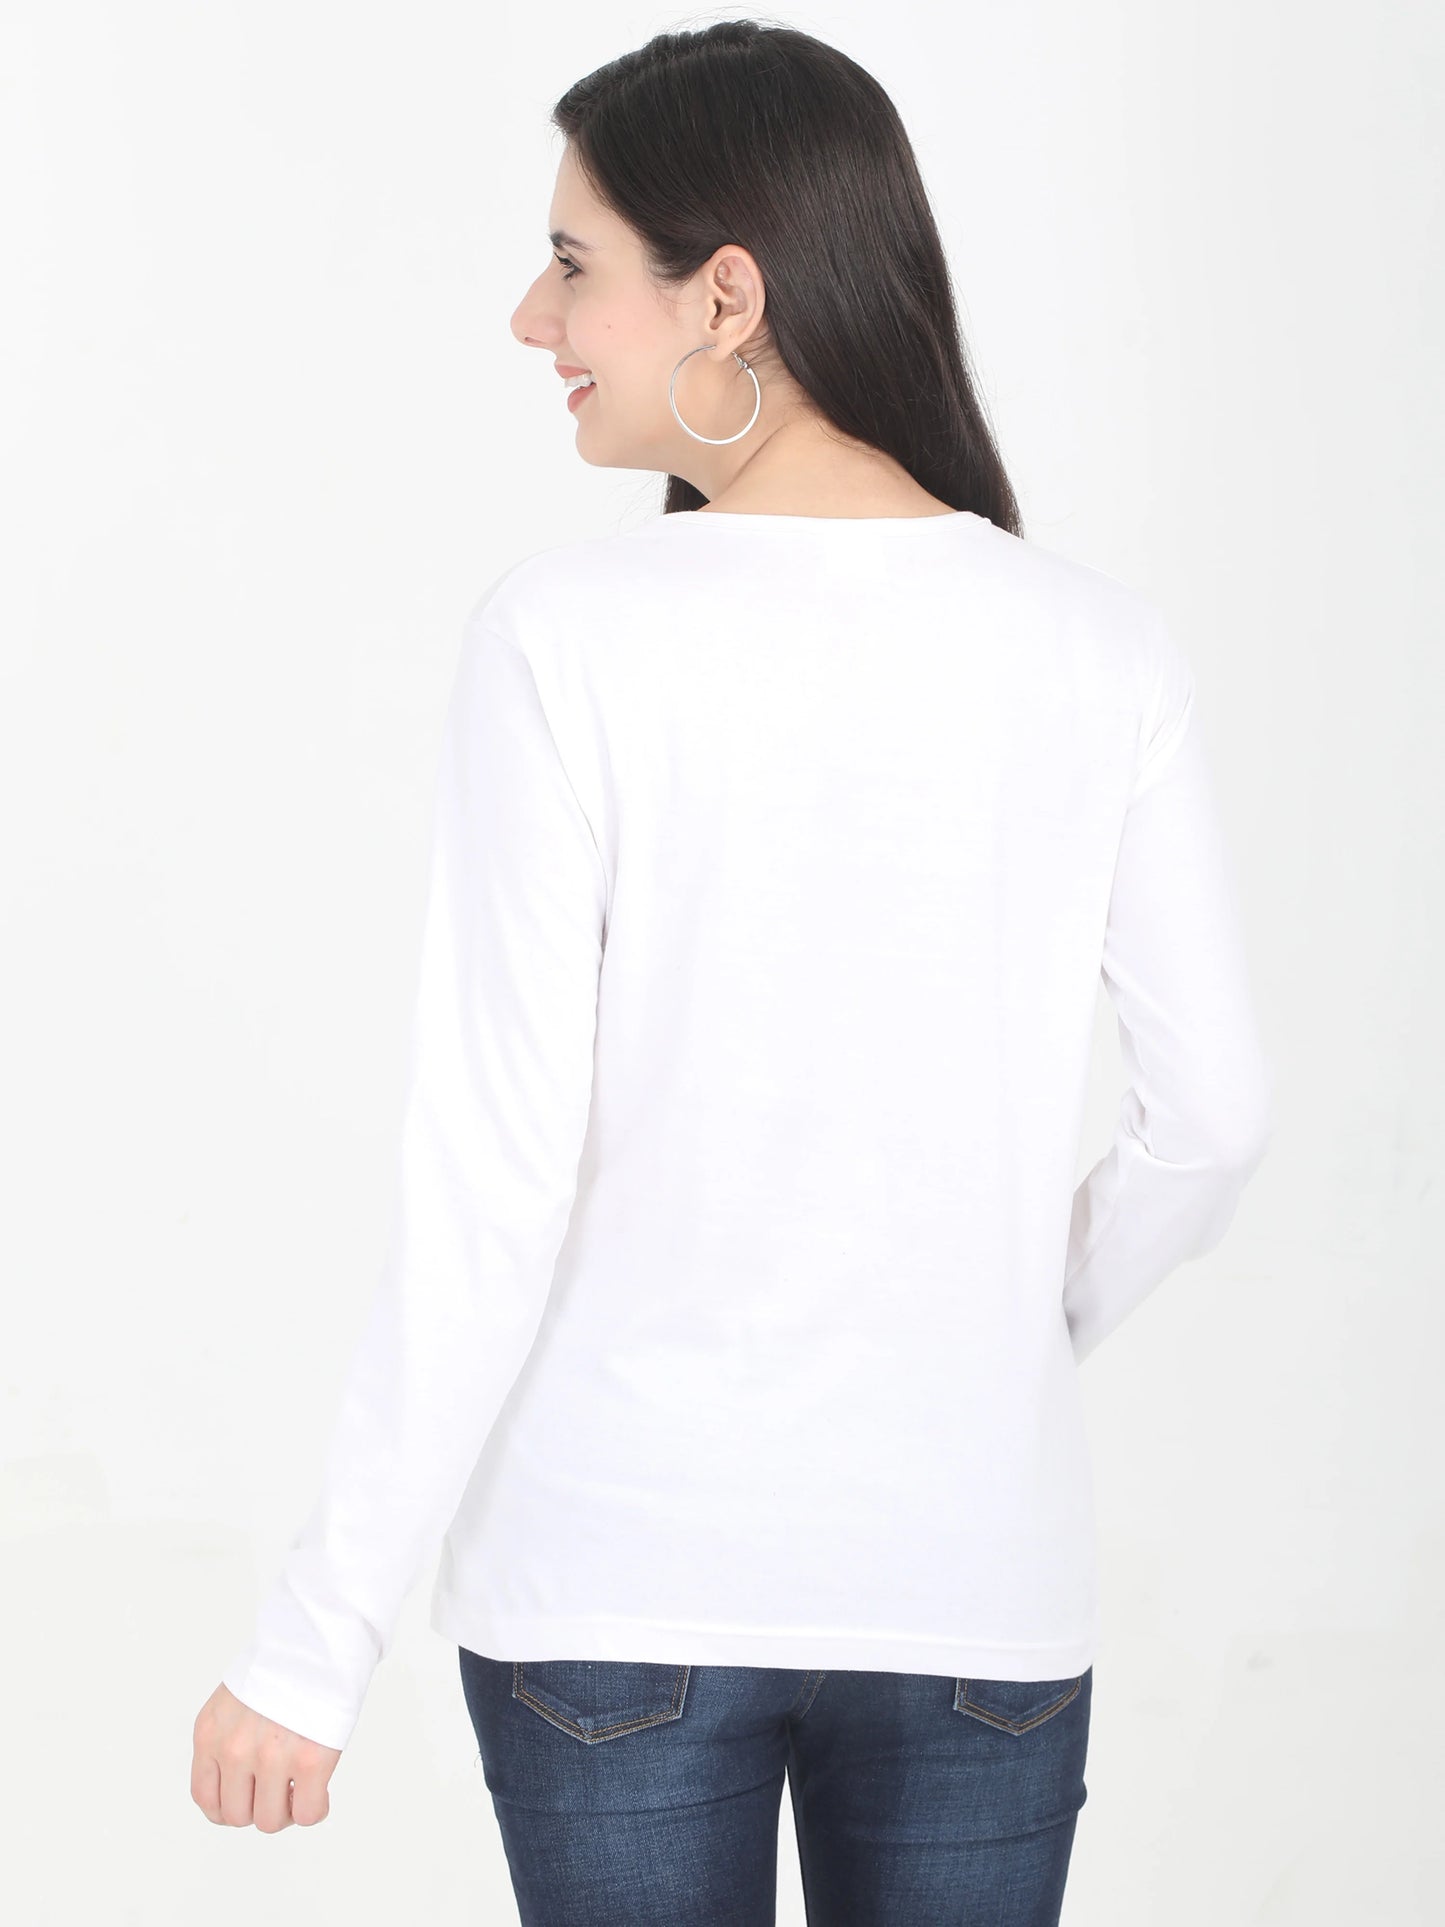 Women's Cotton Plain Round Neck Full Sleeve White Color T-Shirt